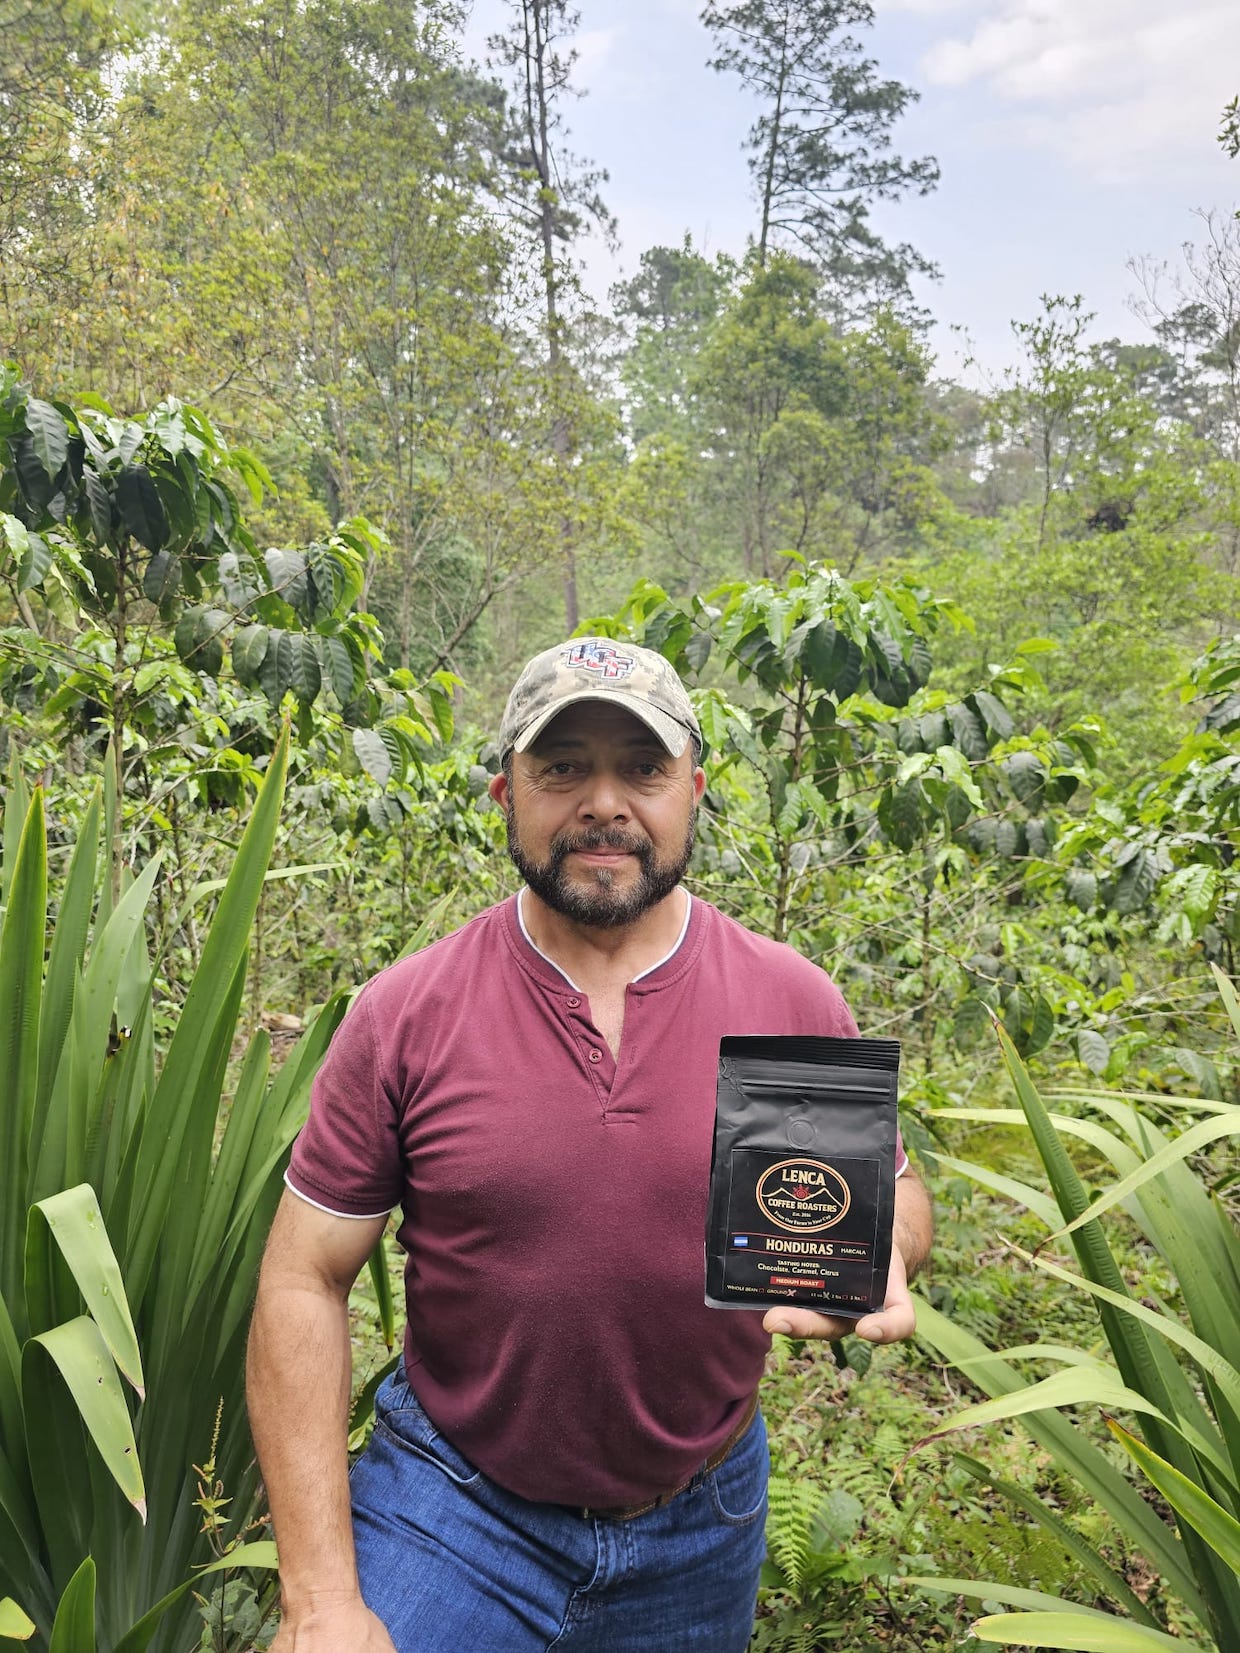 Lenca Coffee Roasters Emilio Garcia